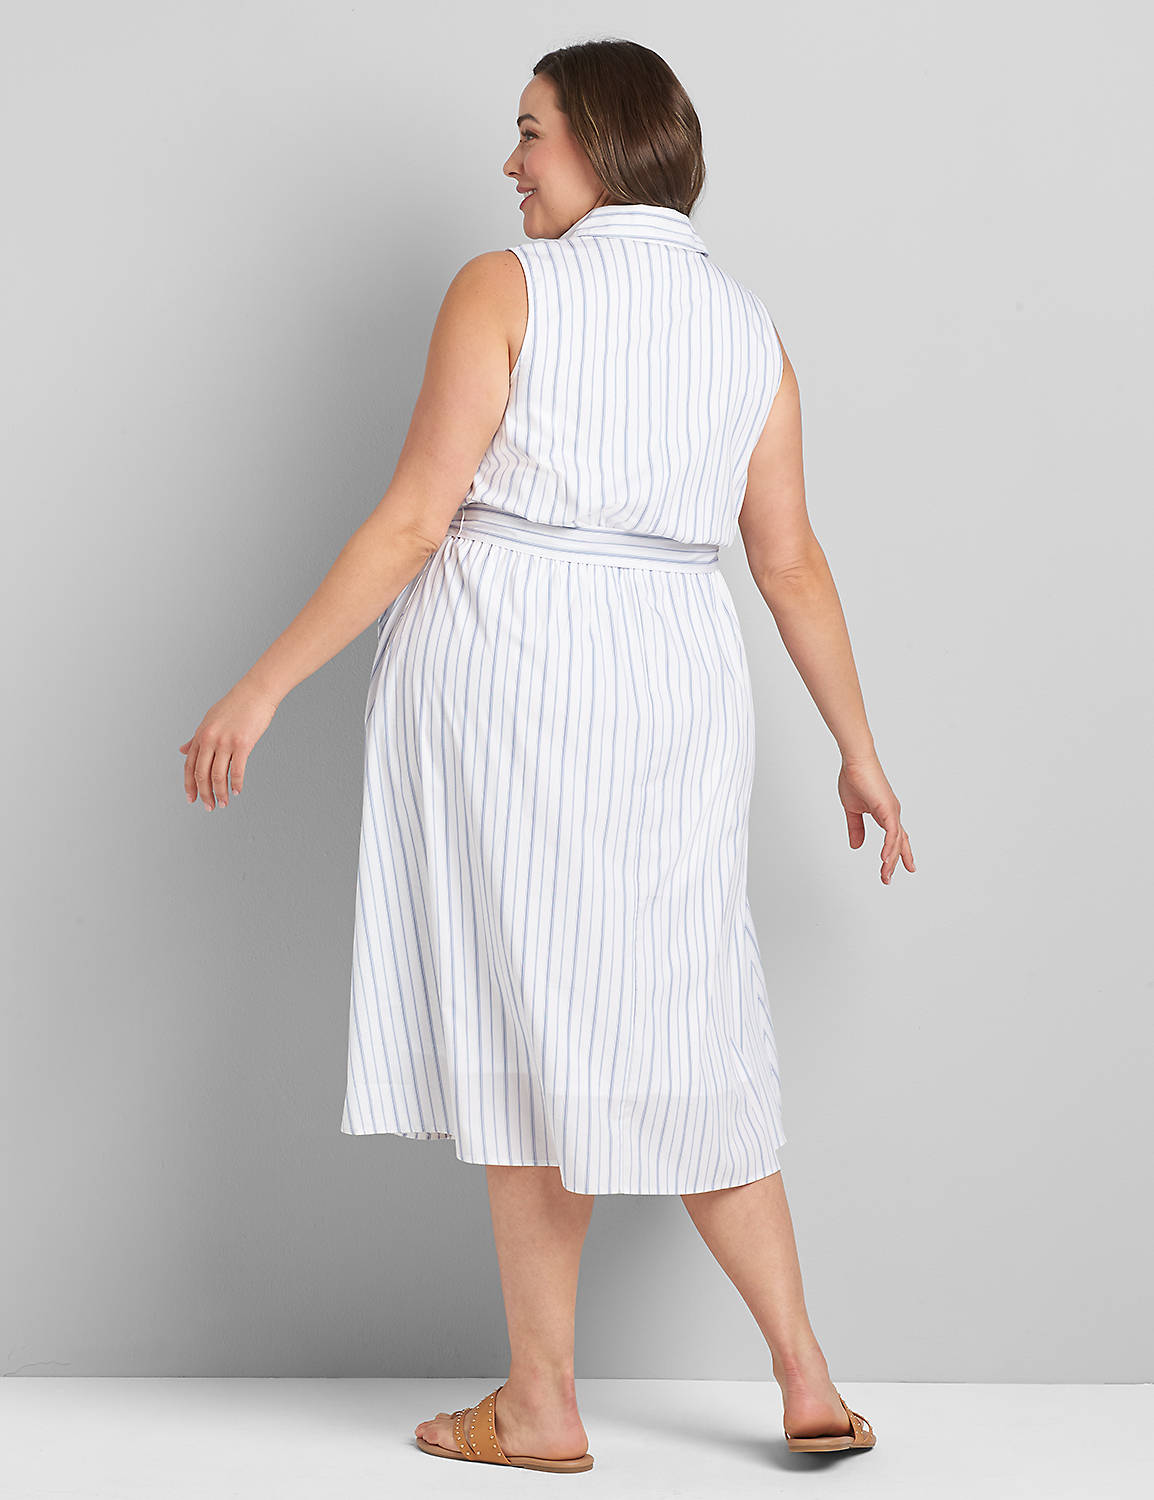 Sleeveless Striped Midi Shirtdress 1120380:Blue/White Stripe As Header:16 Product Image 2